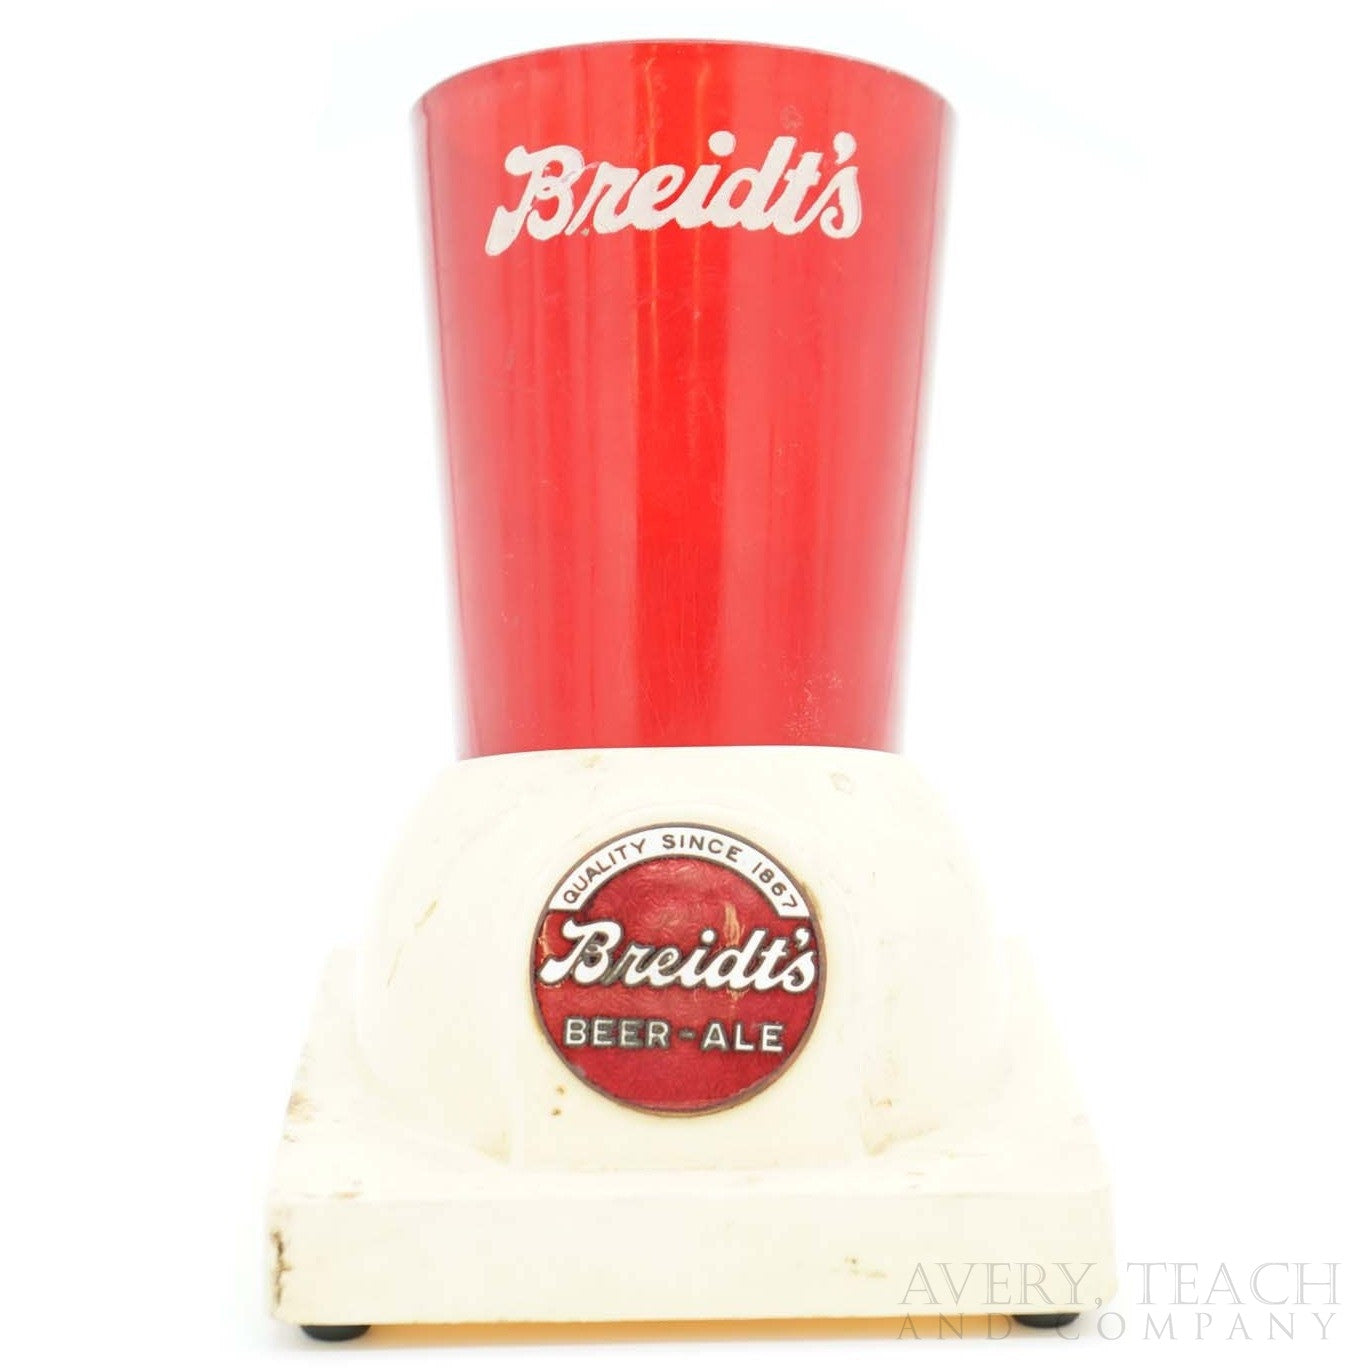 Vintage Breidt's Beer Ale holder - Avery, Teach and Co.